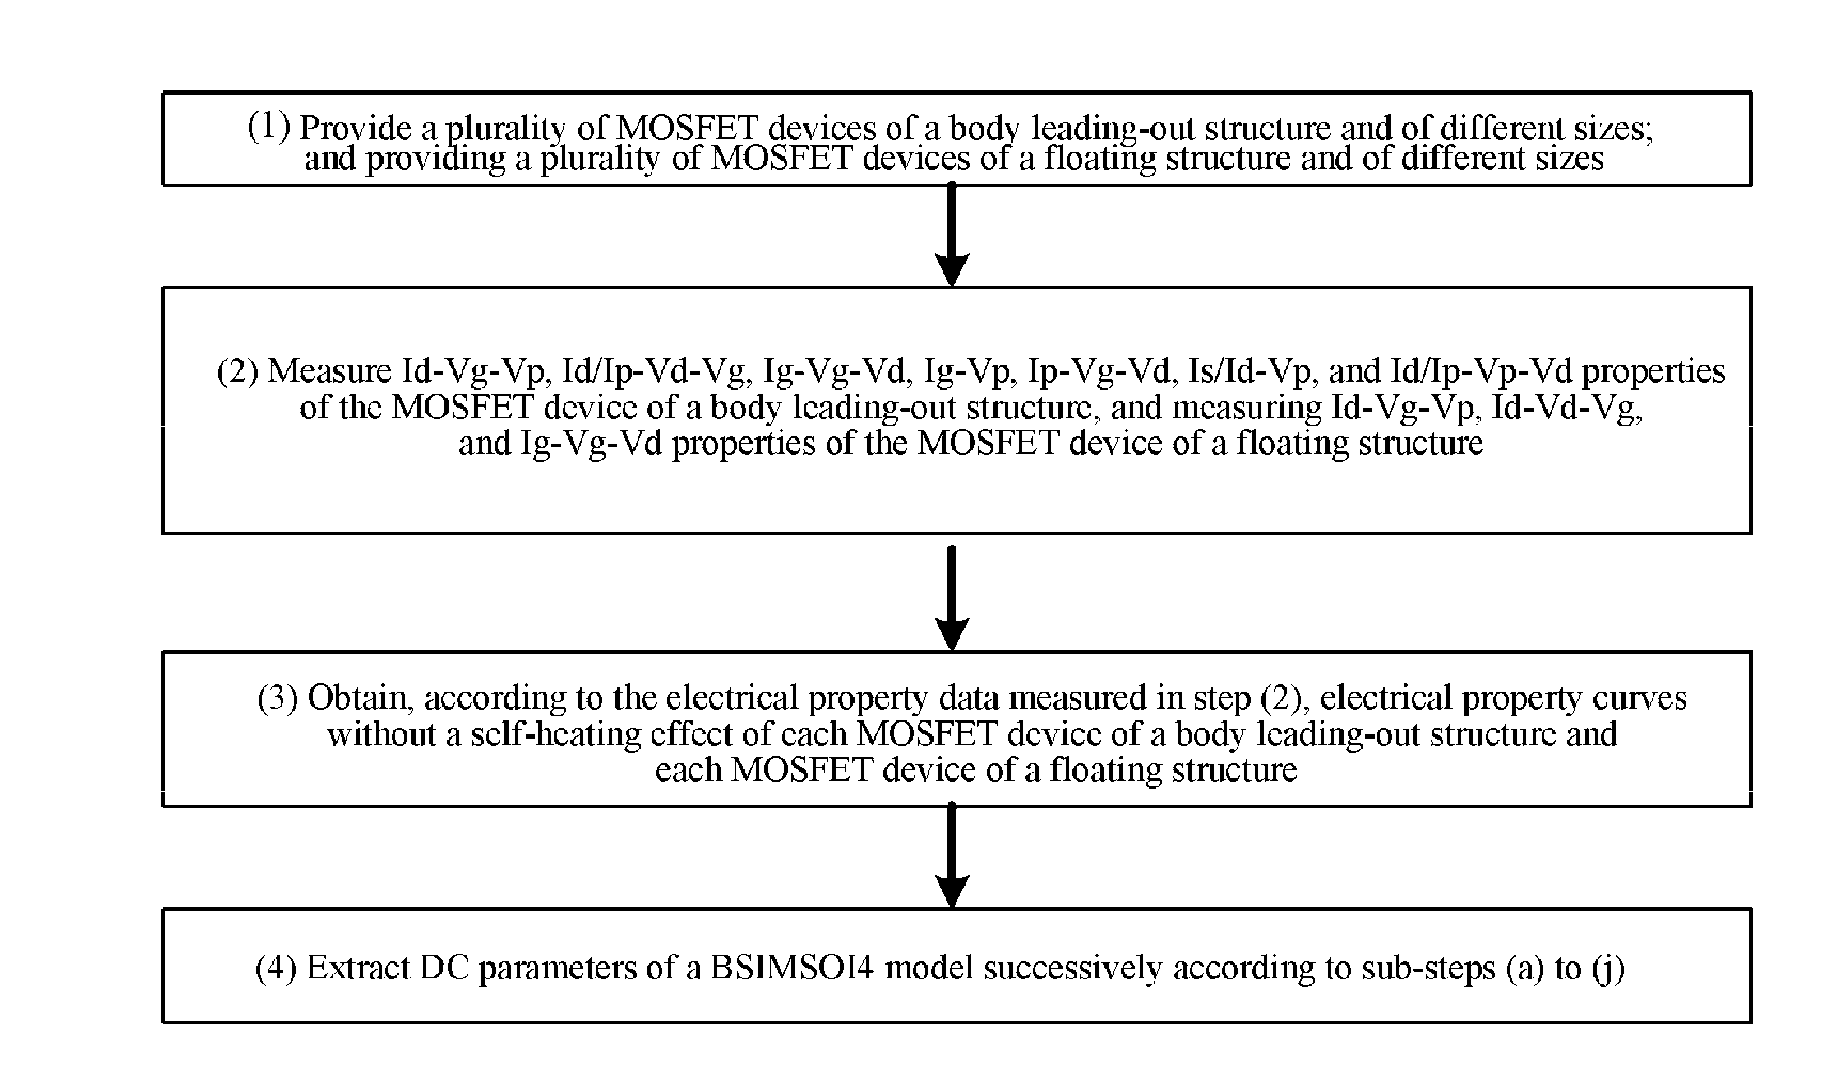 Method for Determining BSIMSOI4 DC Model Parameters